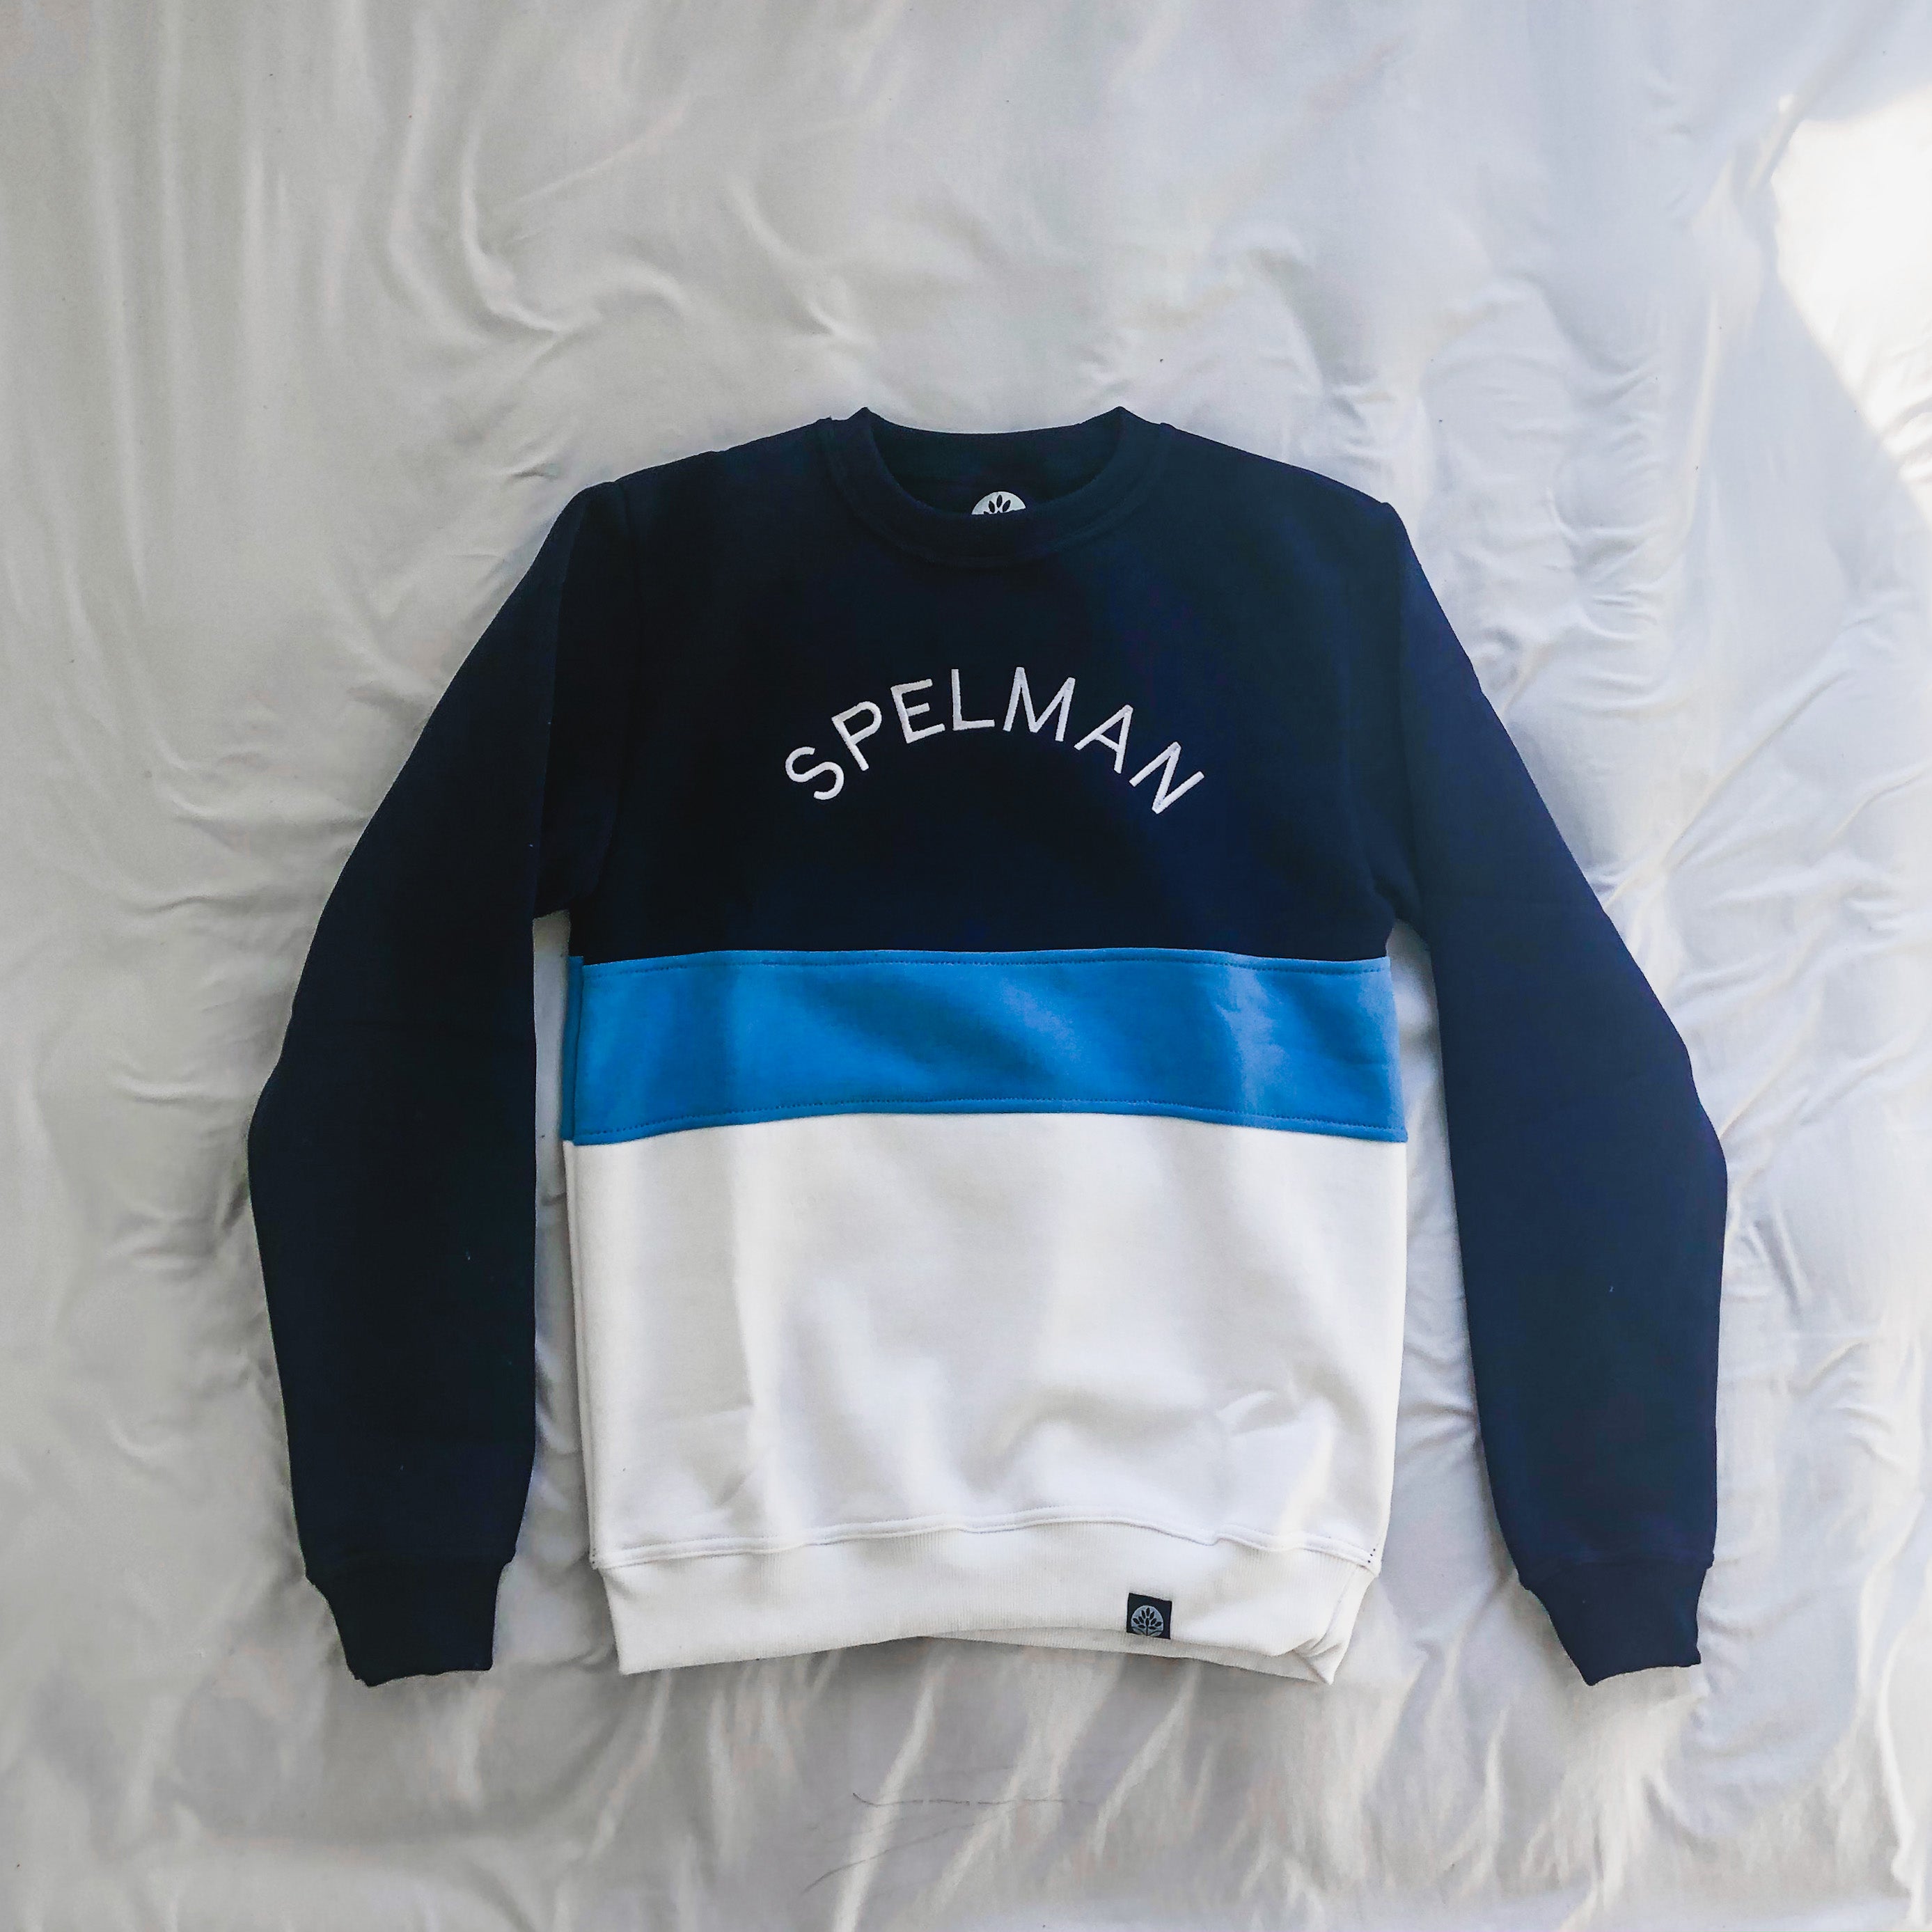 vintage spelman sweatshirt